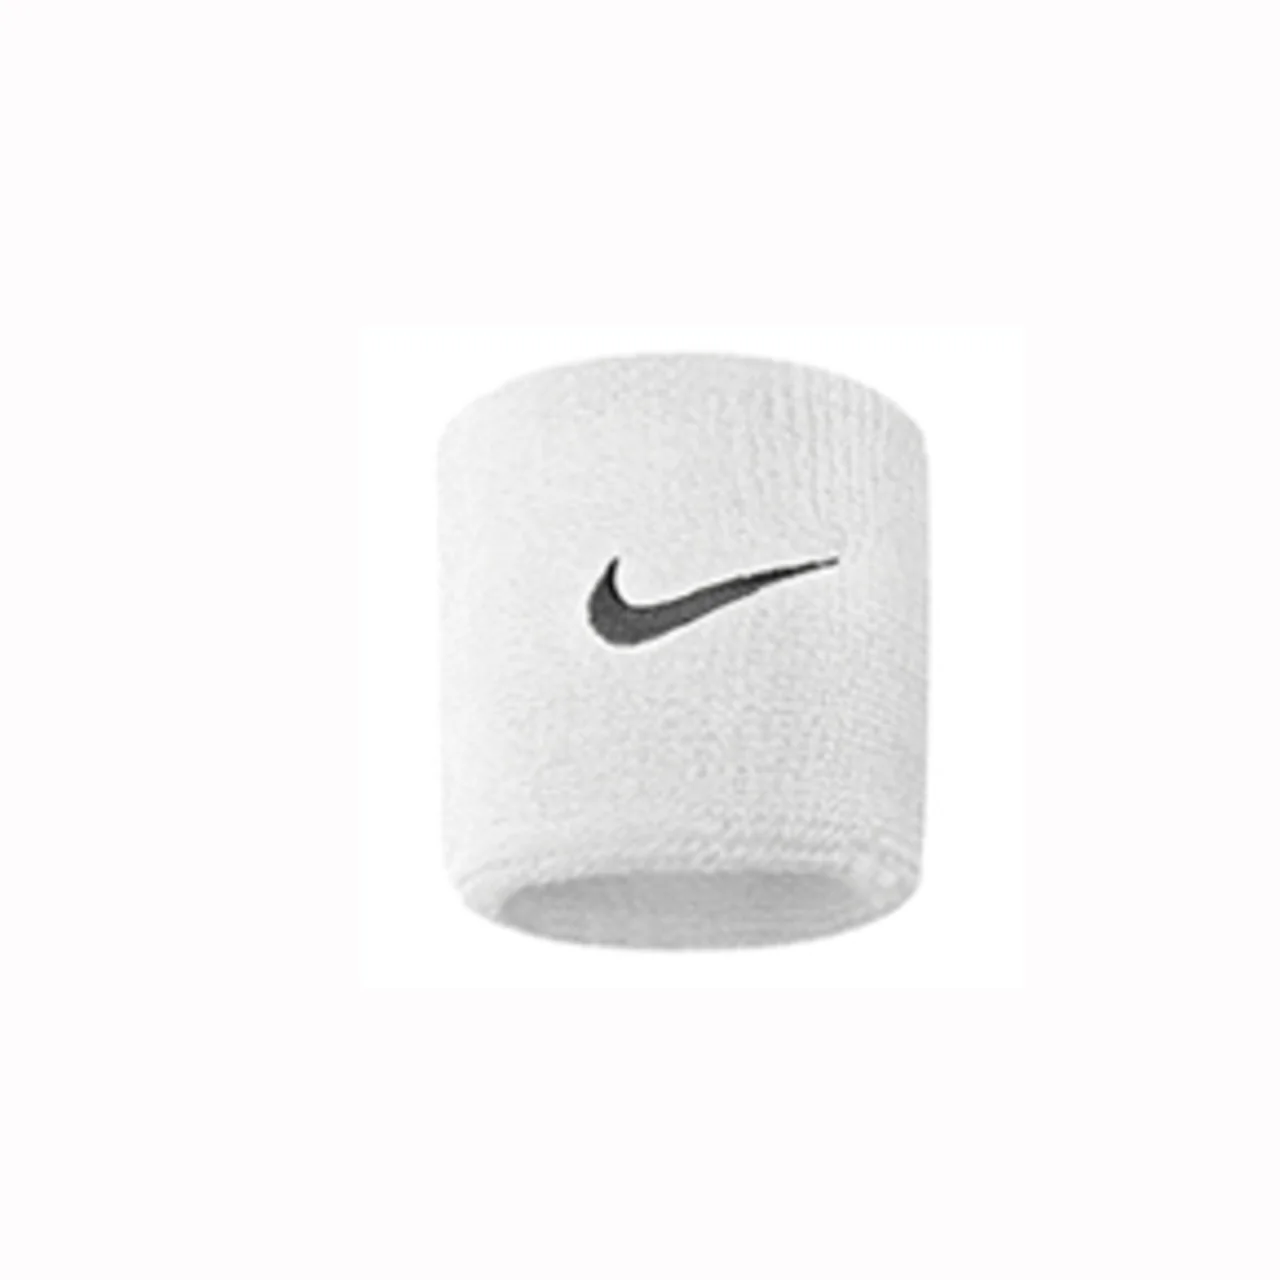 Nike Wristband White